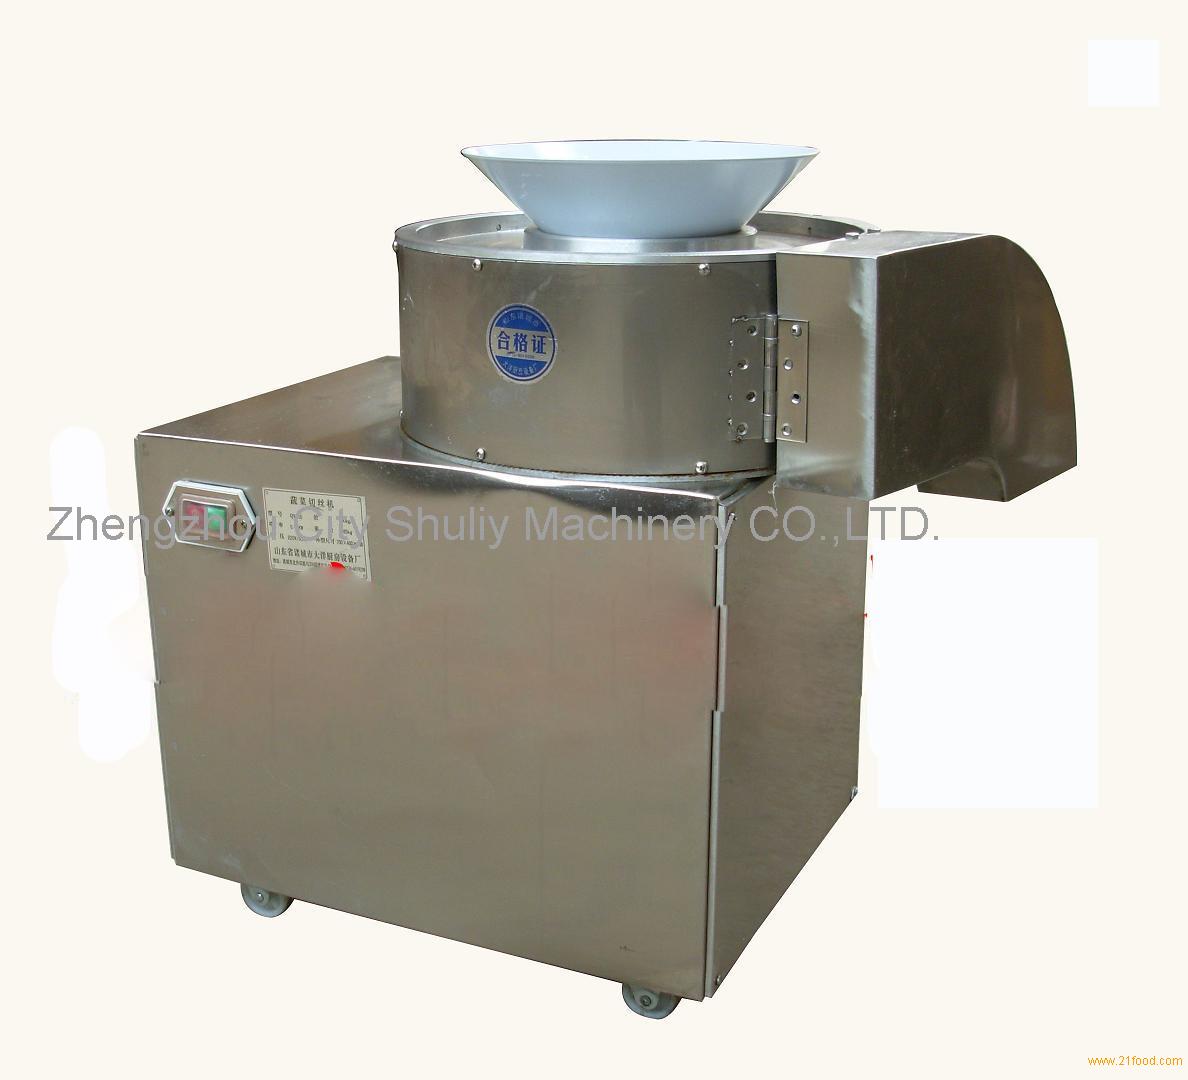 China Low Price Potato Chips Cuttings Machine Factory